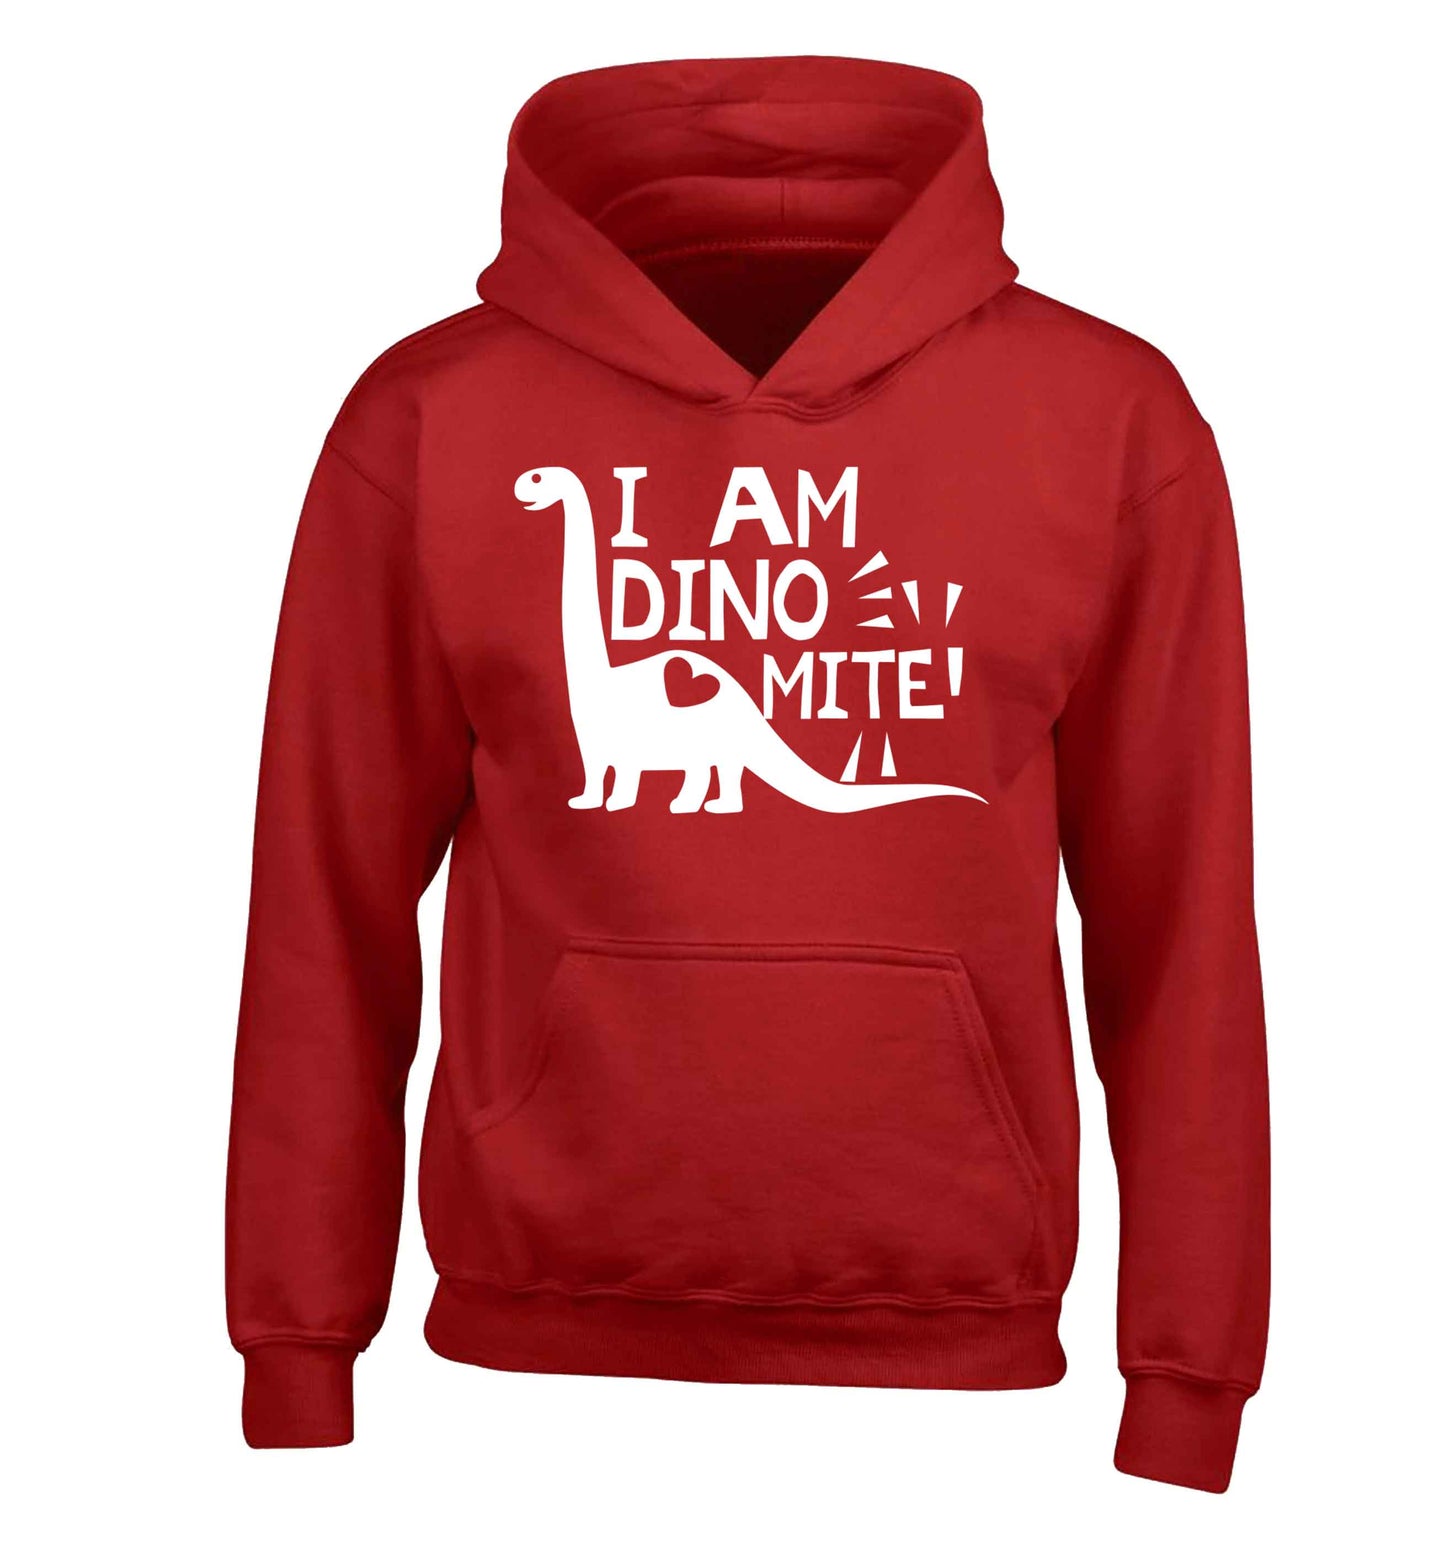 I am dinomite! children's red hoodie 12-13 Years